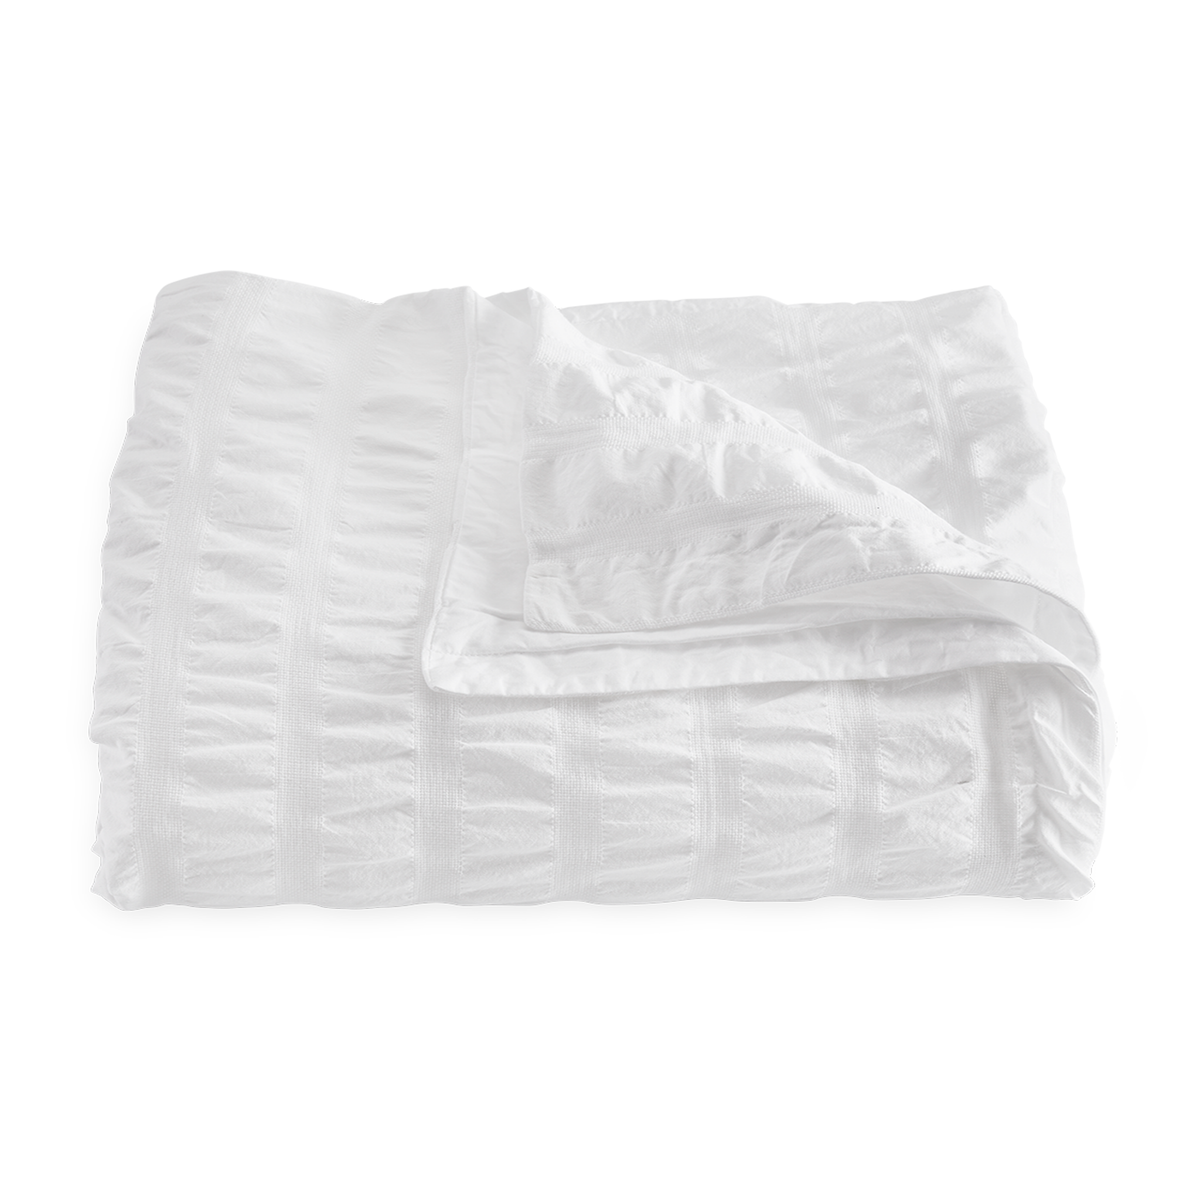 Folded Duvet Cover of Matouk Panama Bedding in Color White